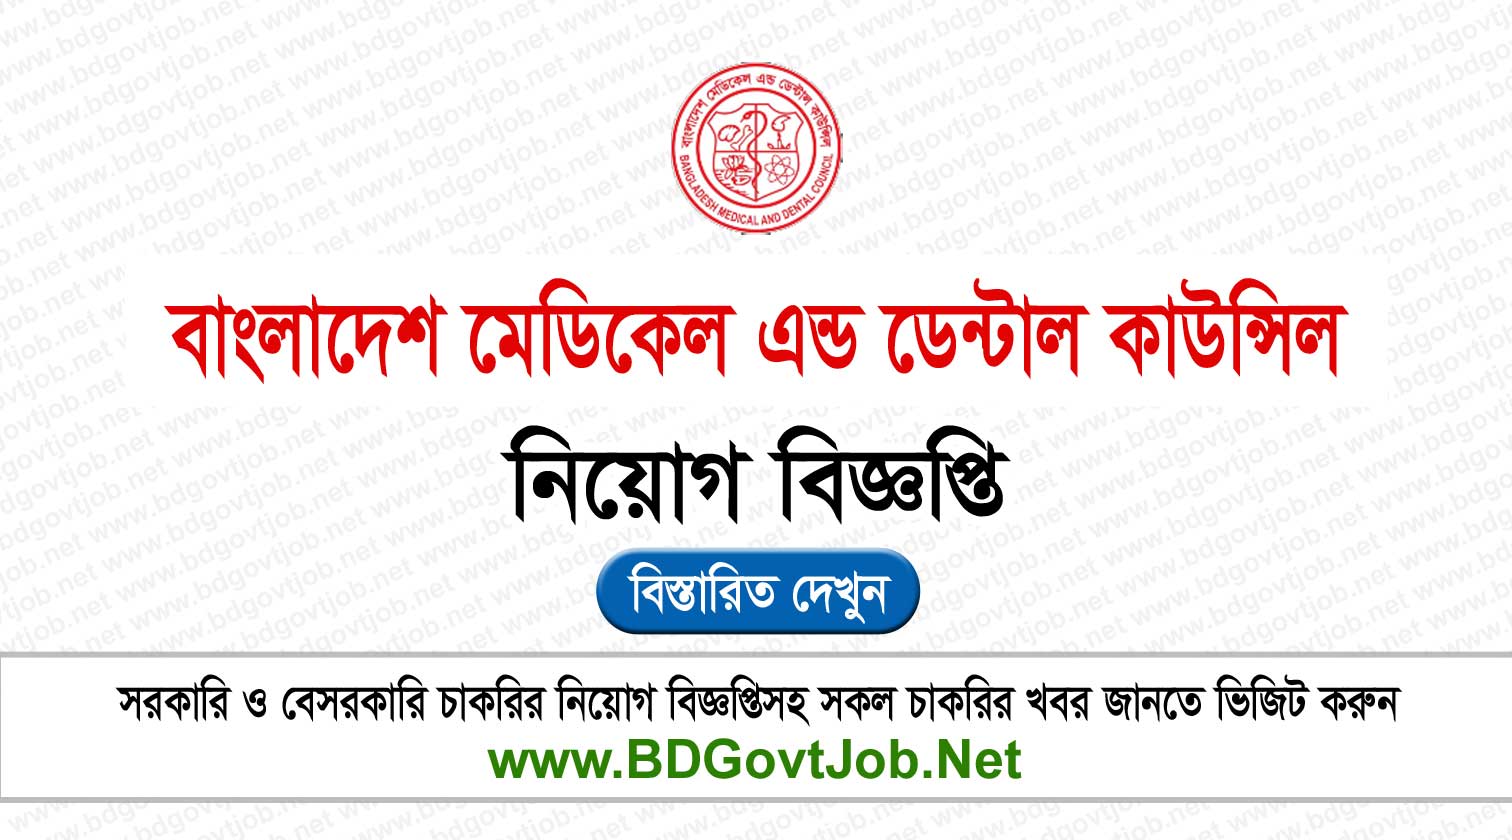 Bangladesh Medical and Dental Council BMDC Job Circular